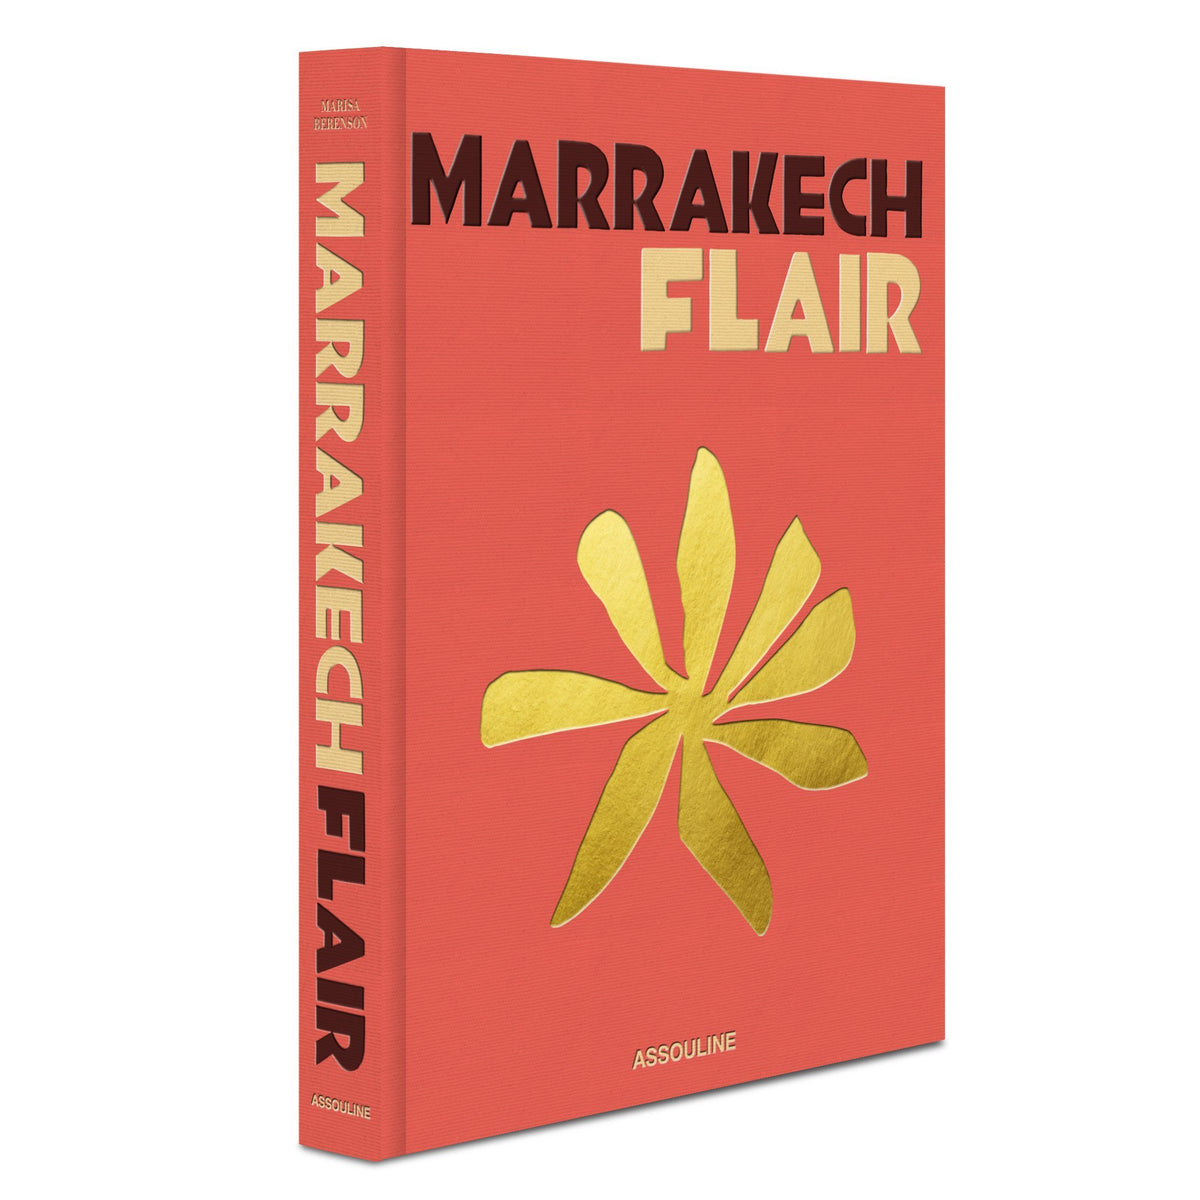 "Marrakech Flair"